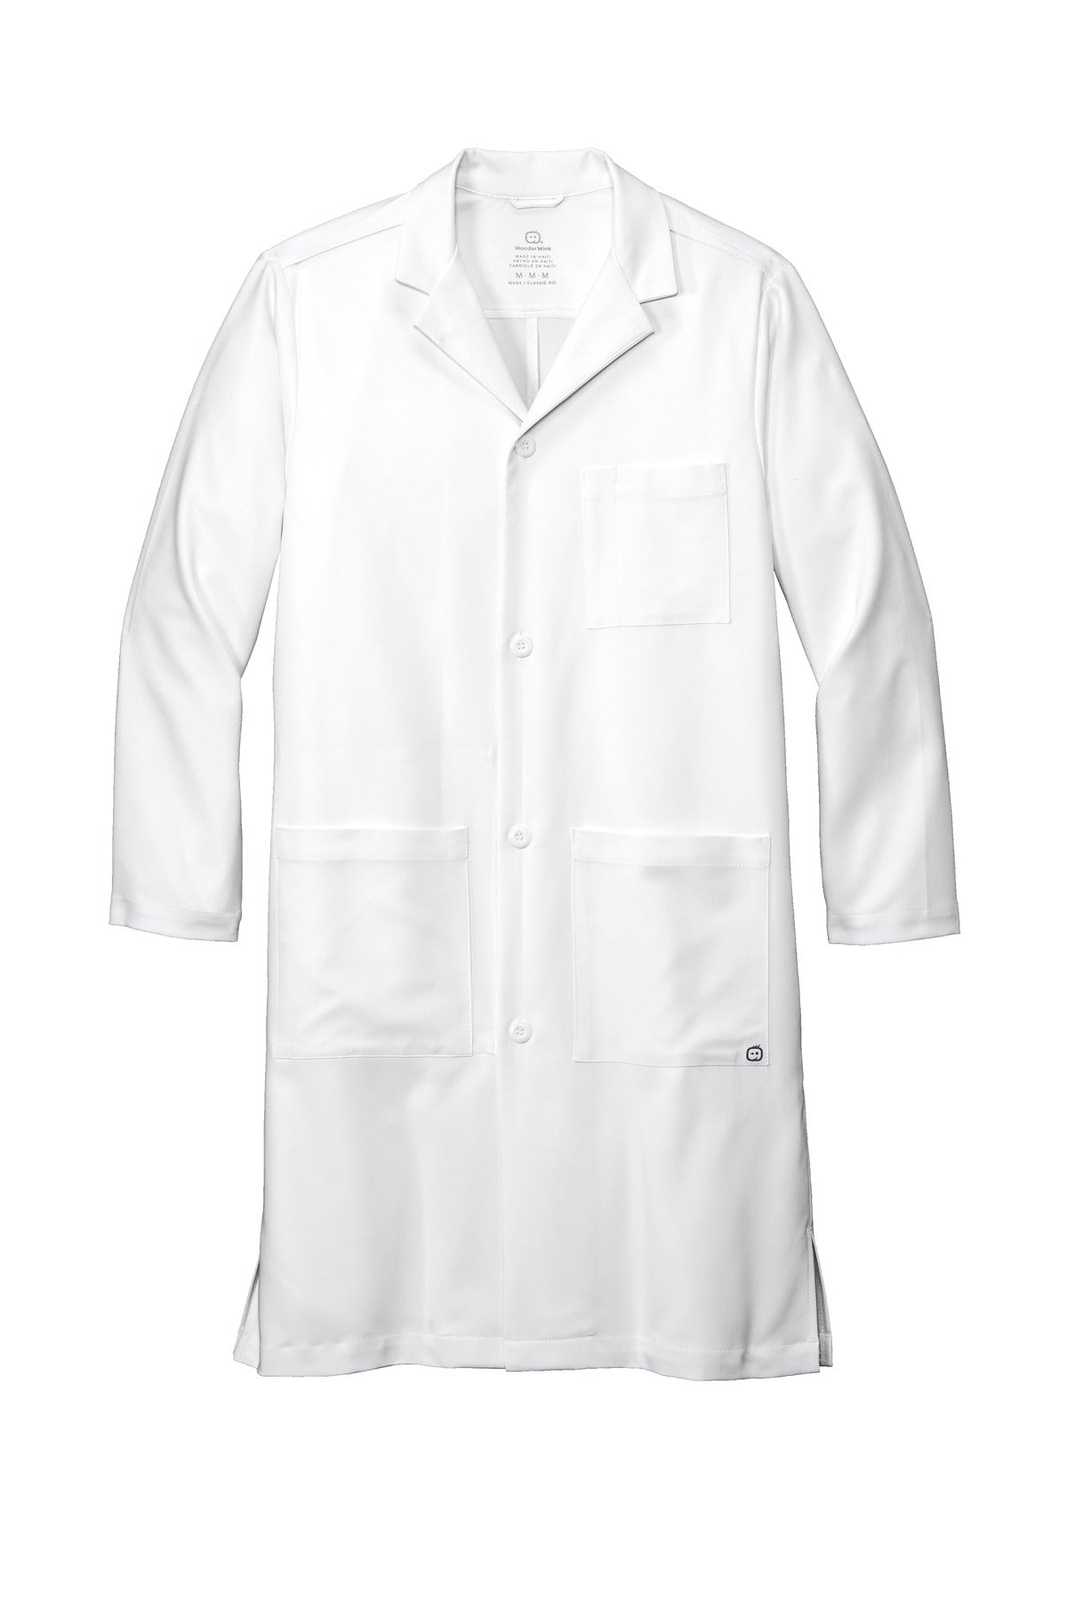 Wonderwink WW5172 Men's Long Lab Coat - White - HIT a Double - 1